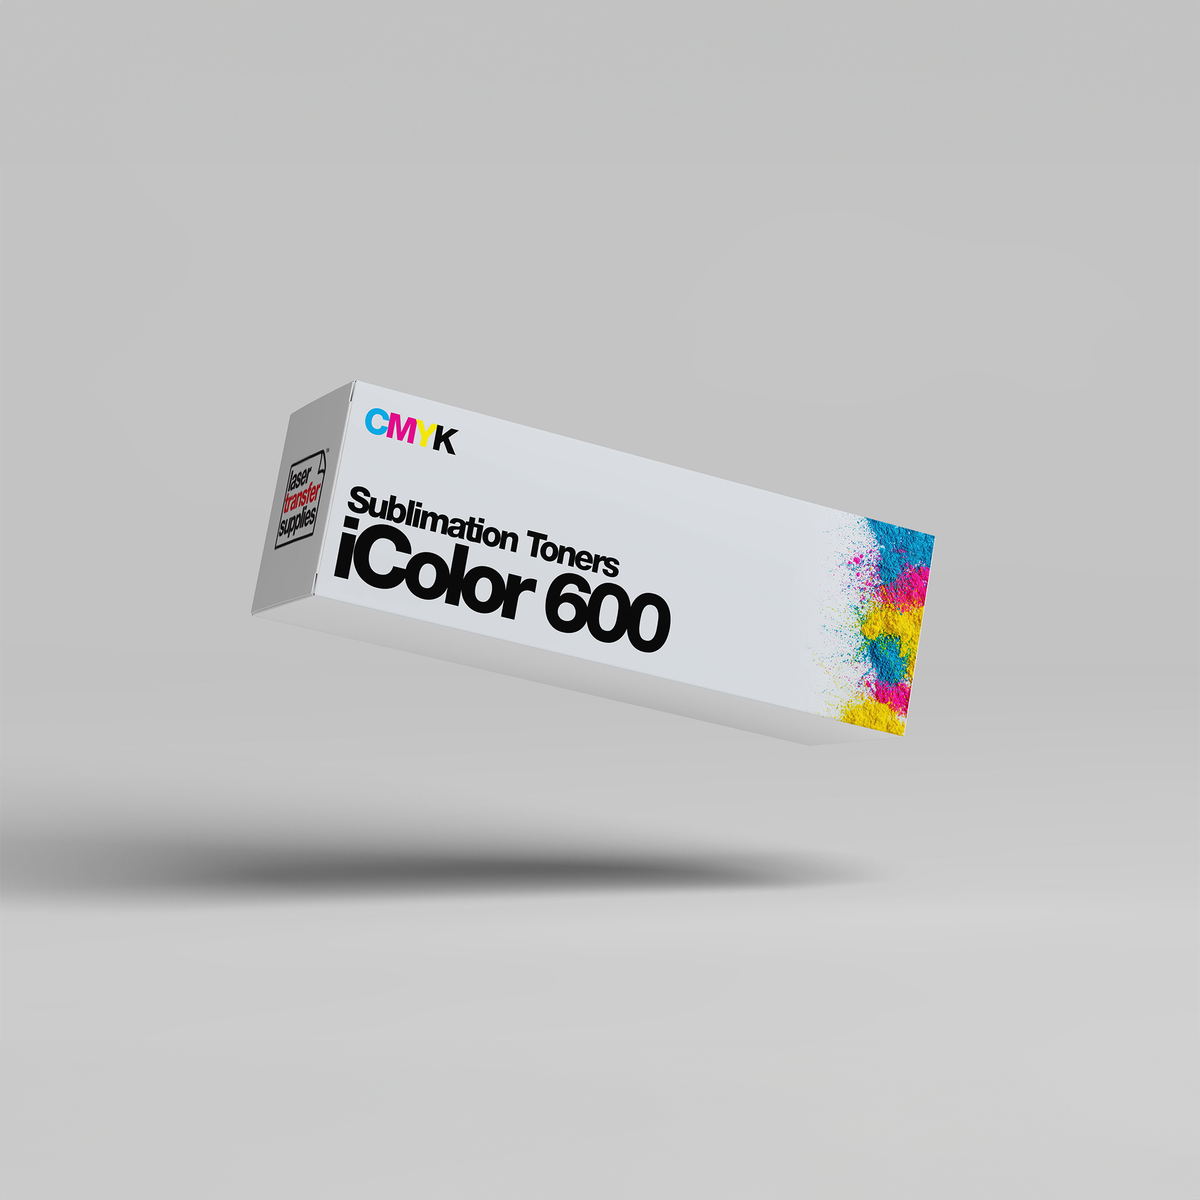 IColor 600 Sublimation Toner